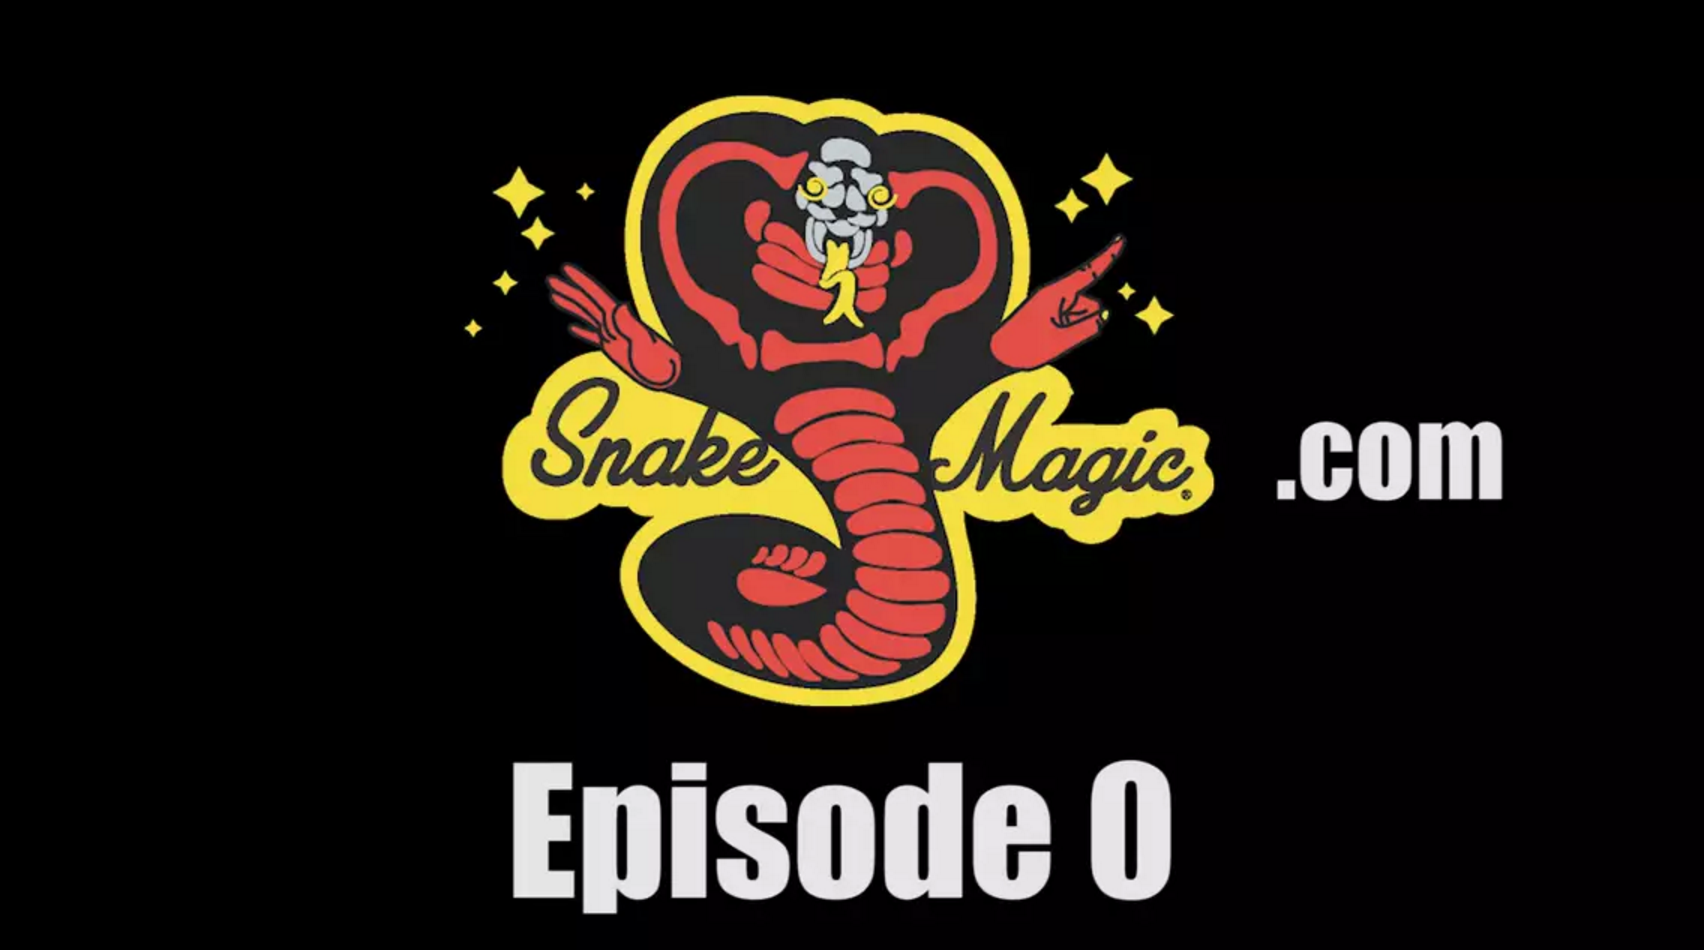 Snake Magic Episode 0 Trailer